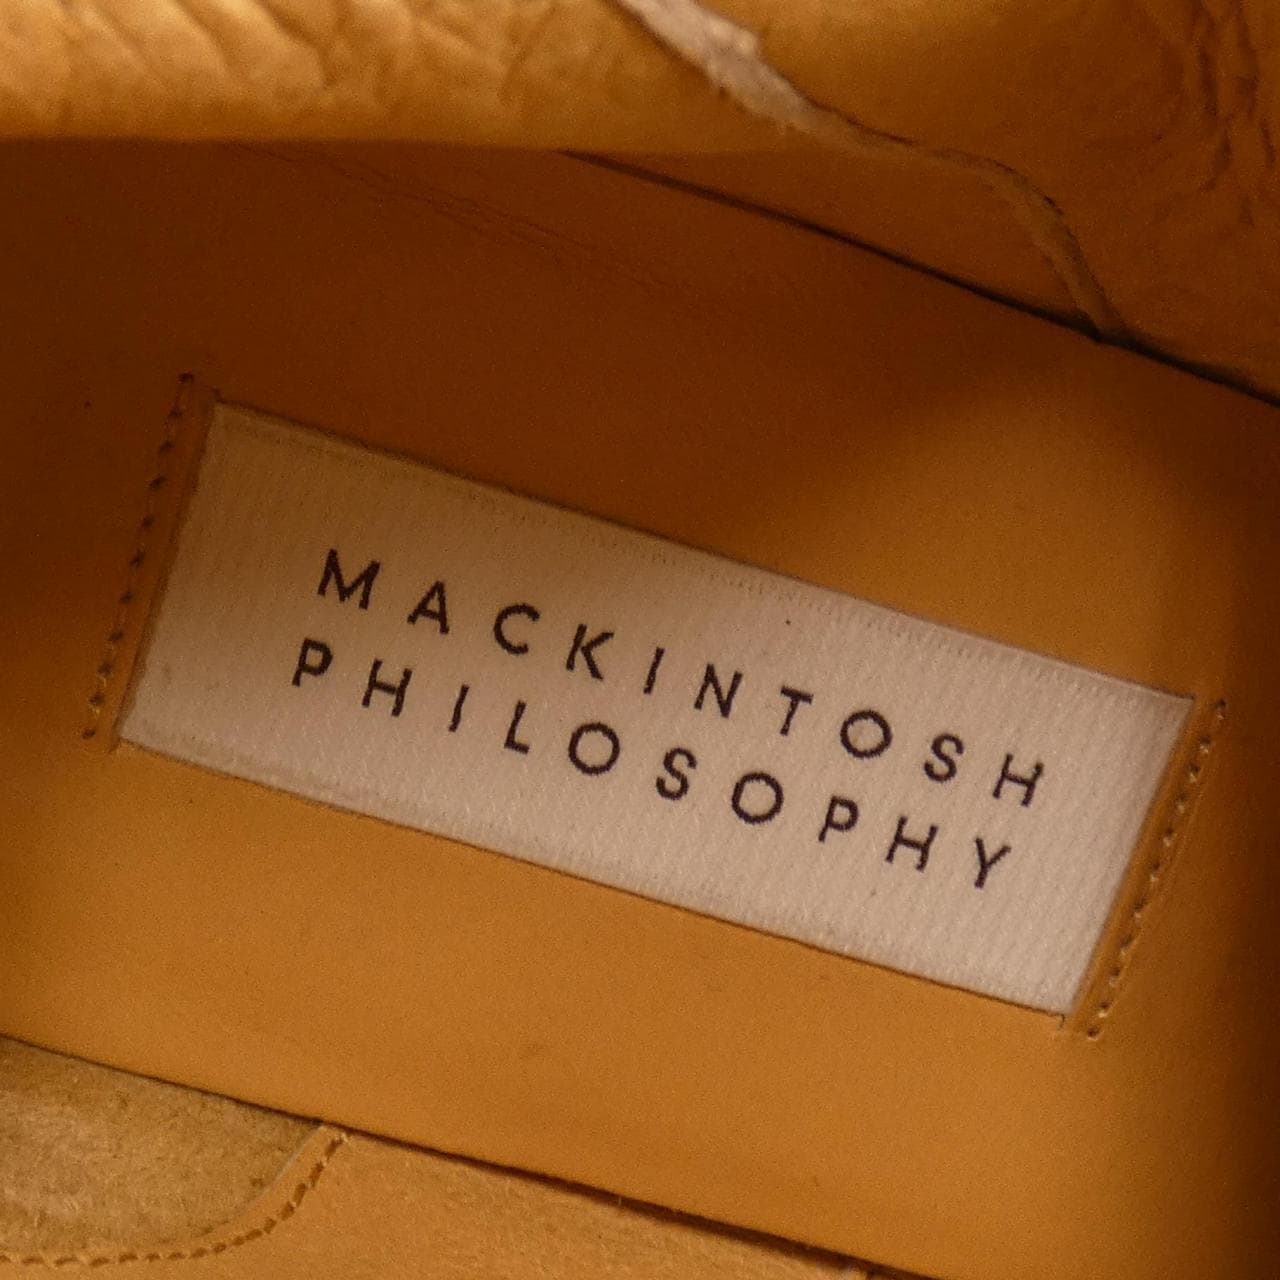 Macintosh philosophy MACKINTOSH PHILOSOPH boots